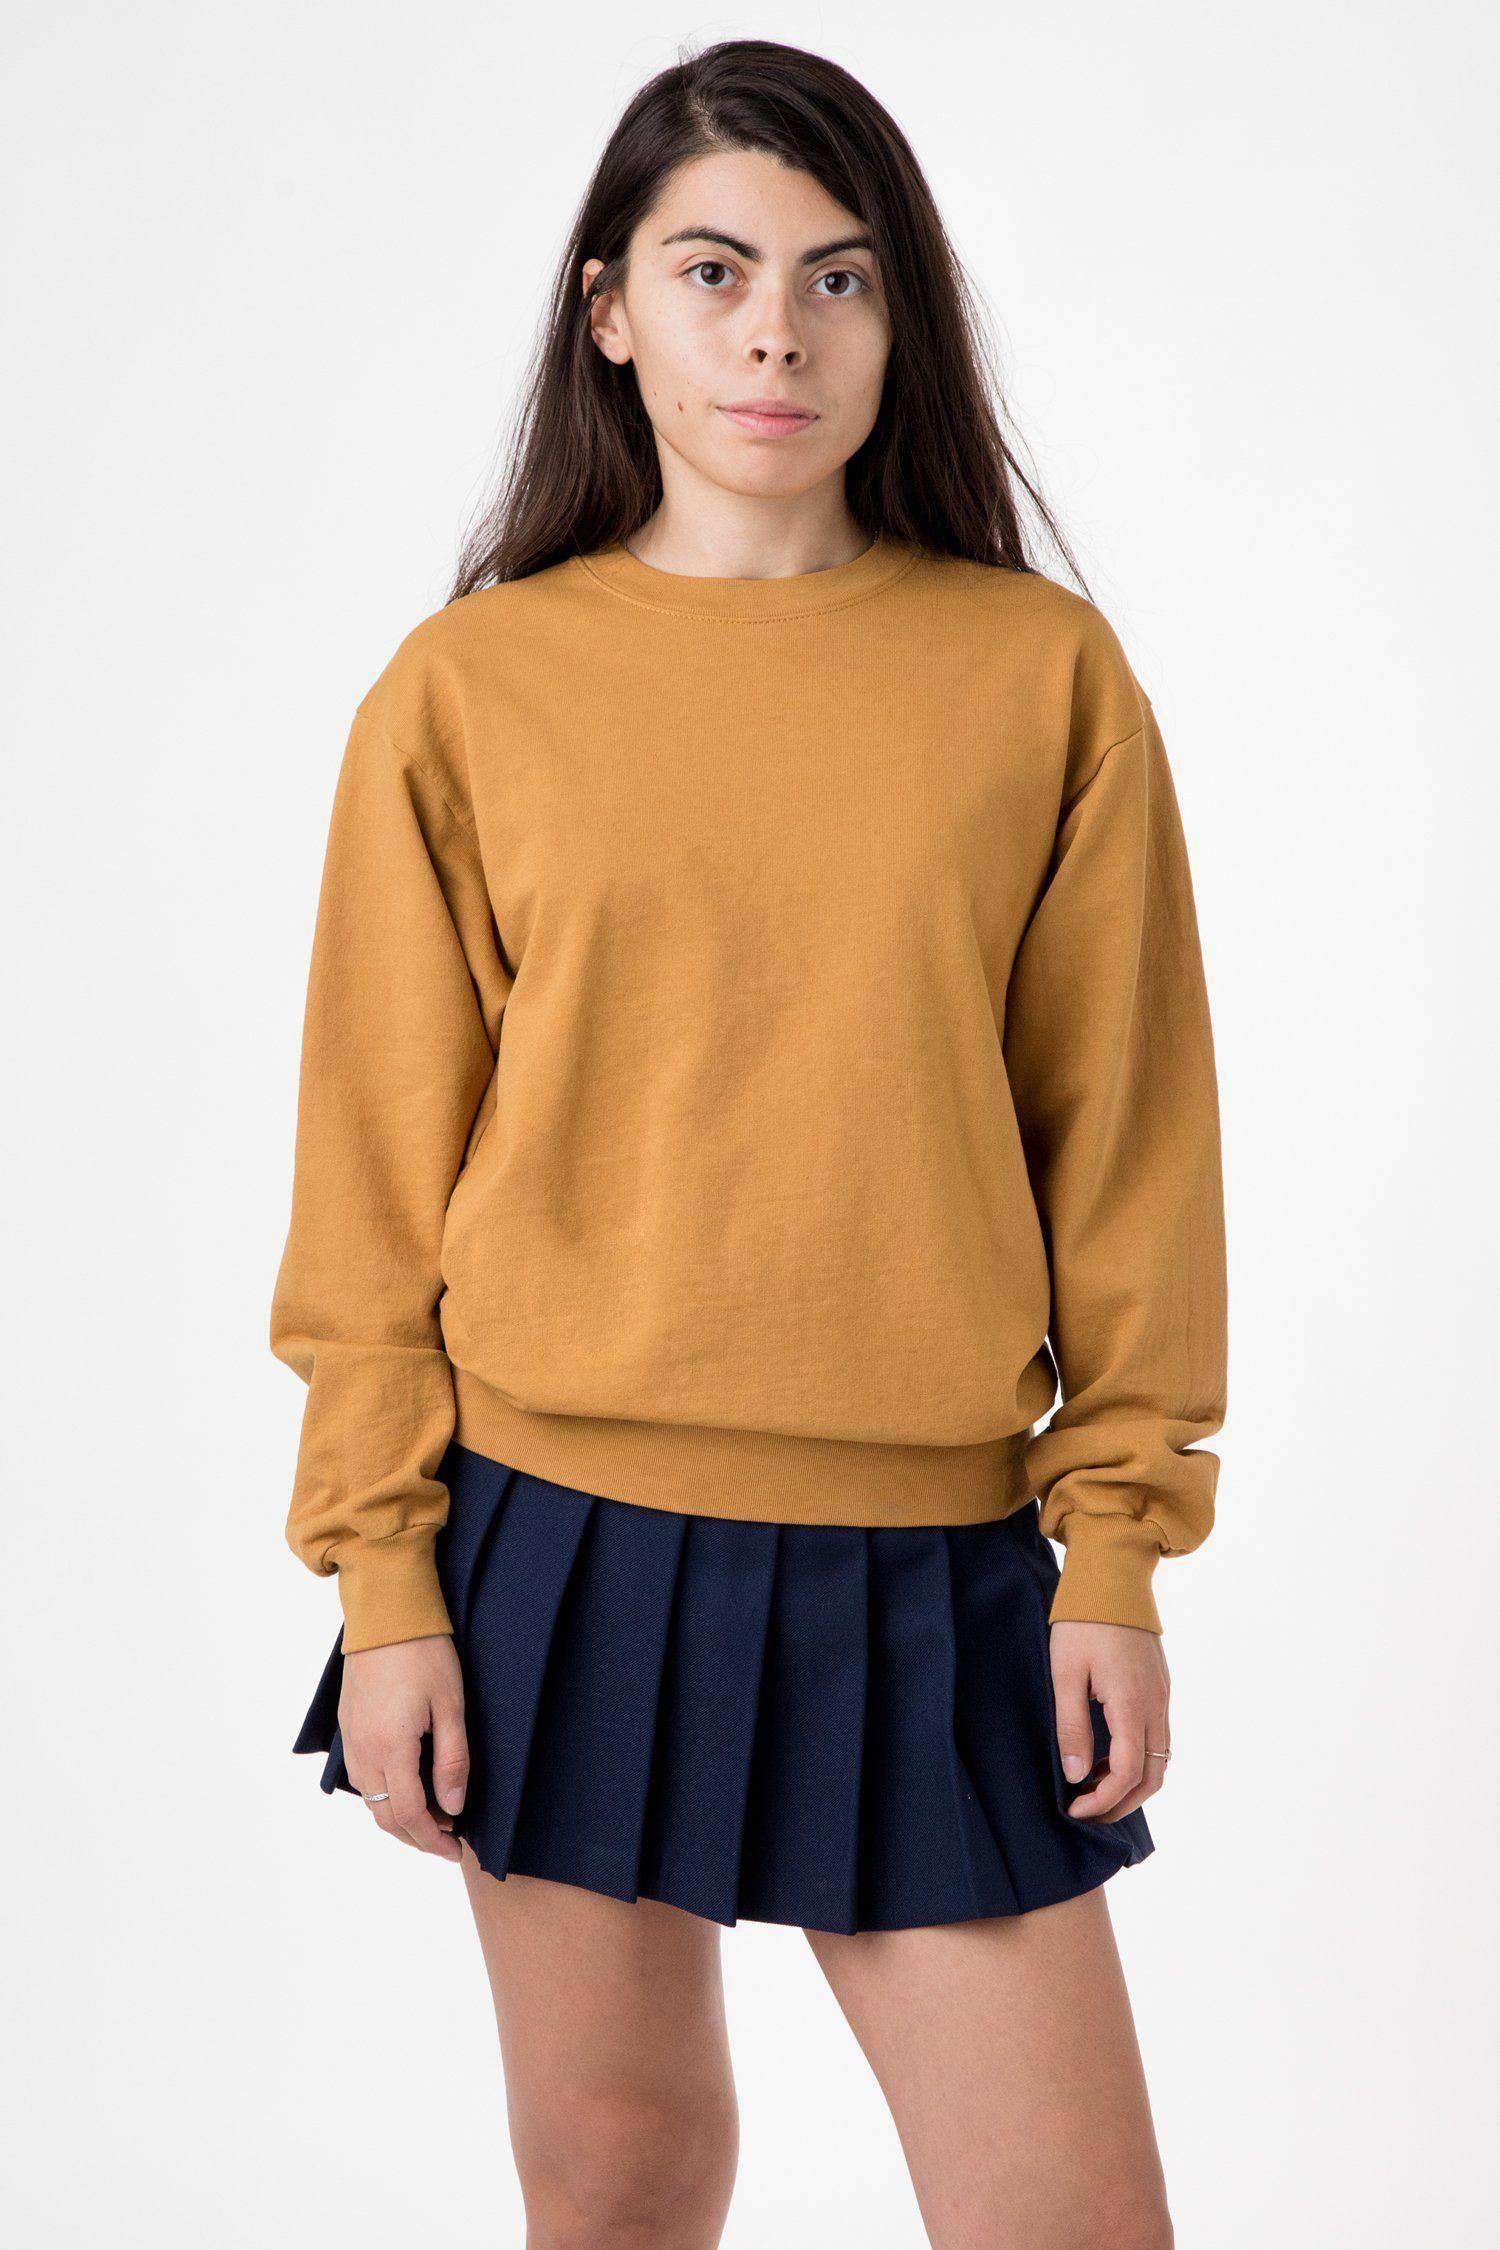 MWT07GD Unisex - Long Sleeve Garment Dye French Terry Pullover Sweatshirt Los Angeles Apparel Camel XS 